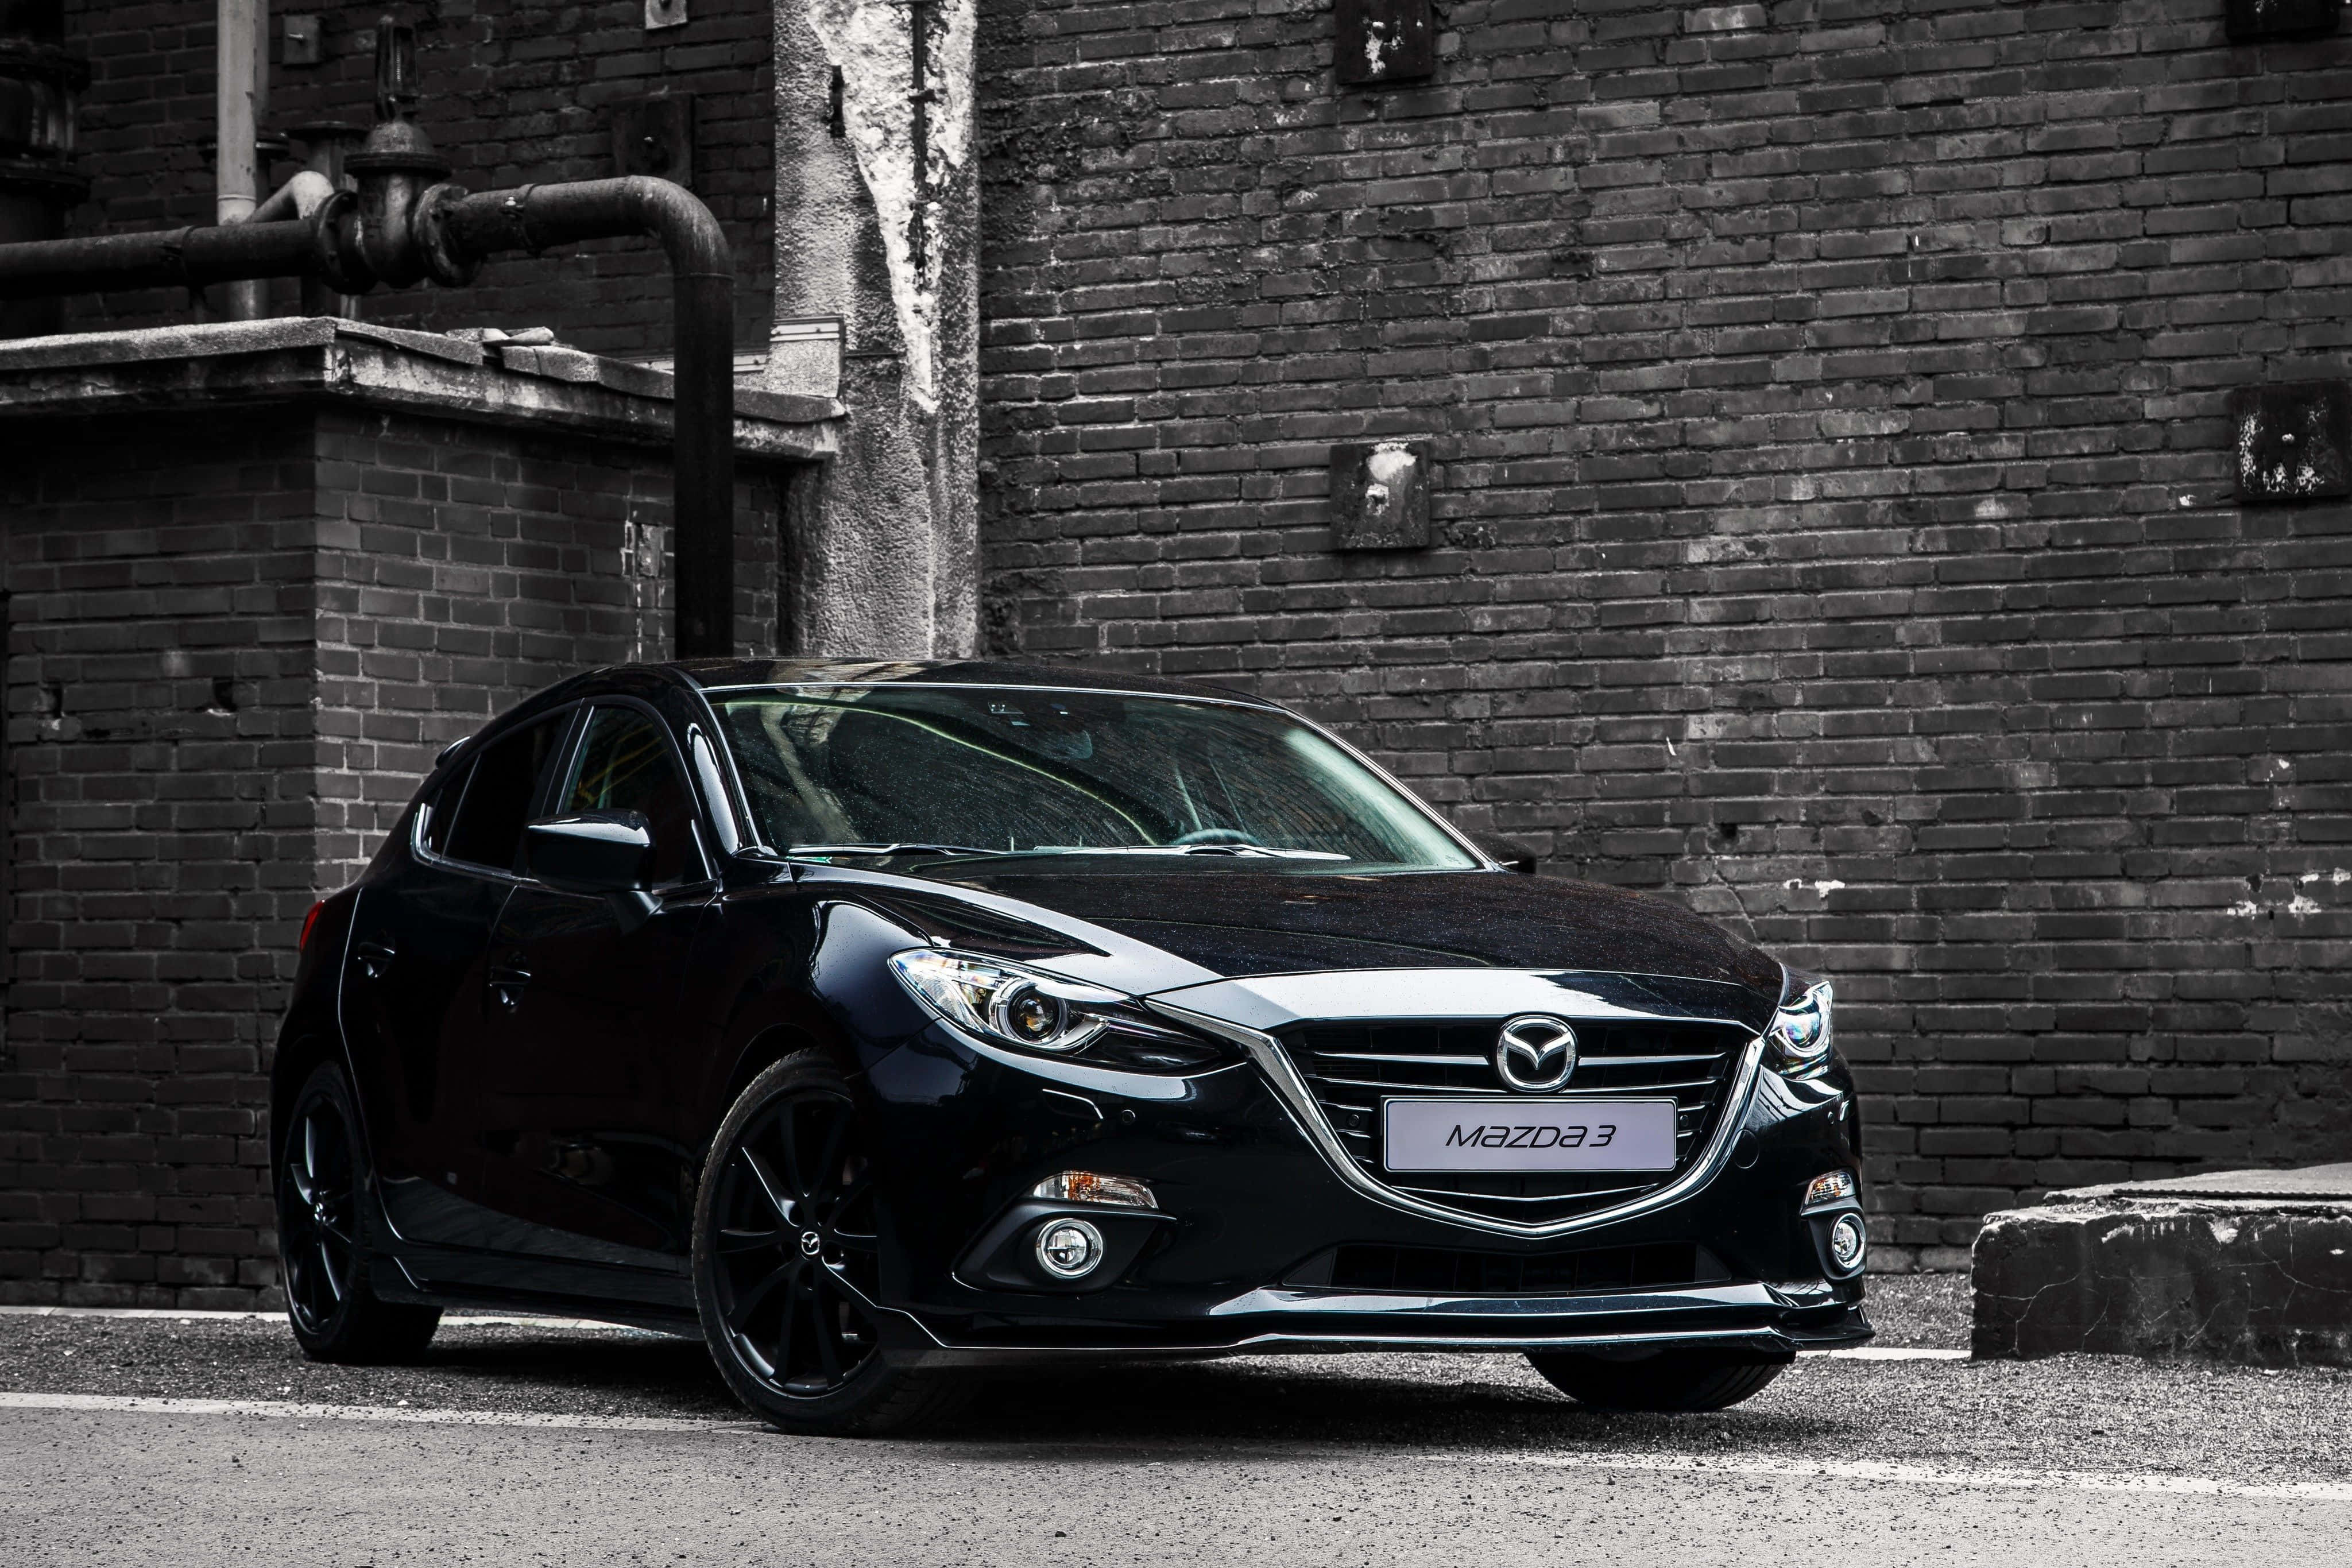 Black mazda. Мазда 3 седан 2016 черный. Mazda 3 черная. Мазда 3 2015 черная. Мазда 3 2014 черная.